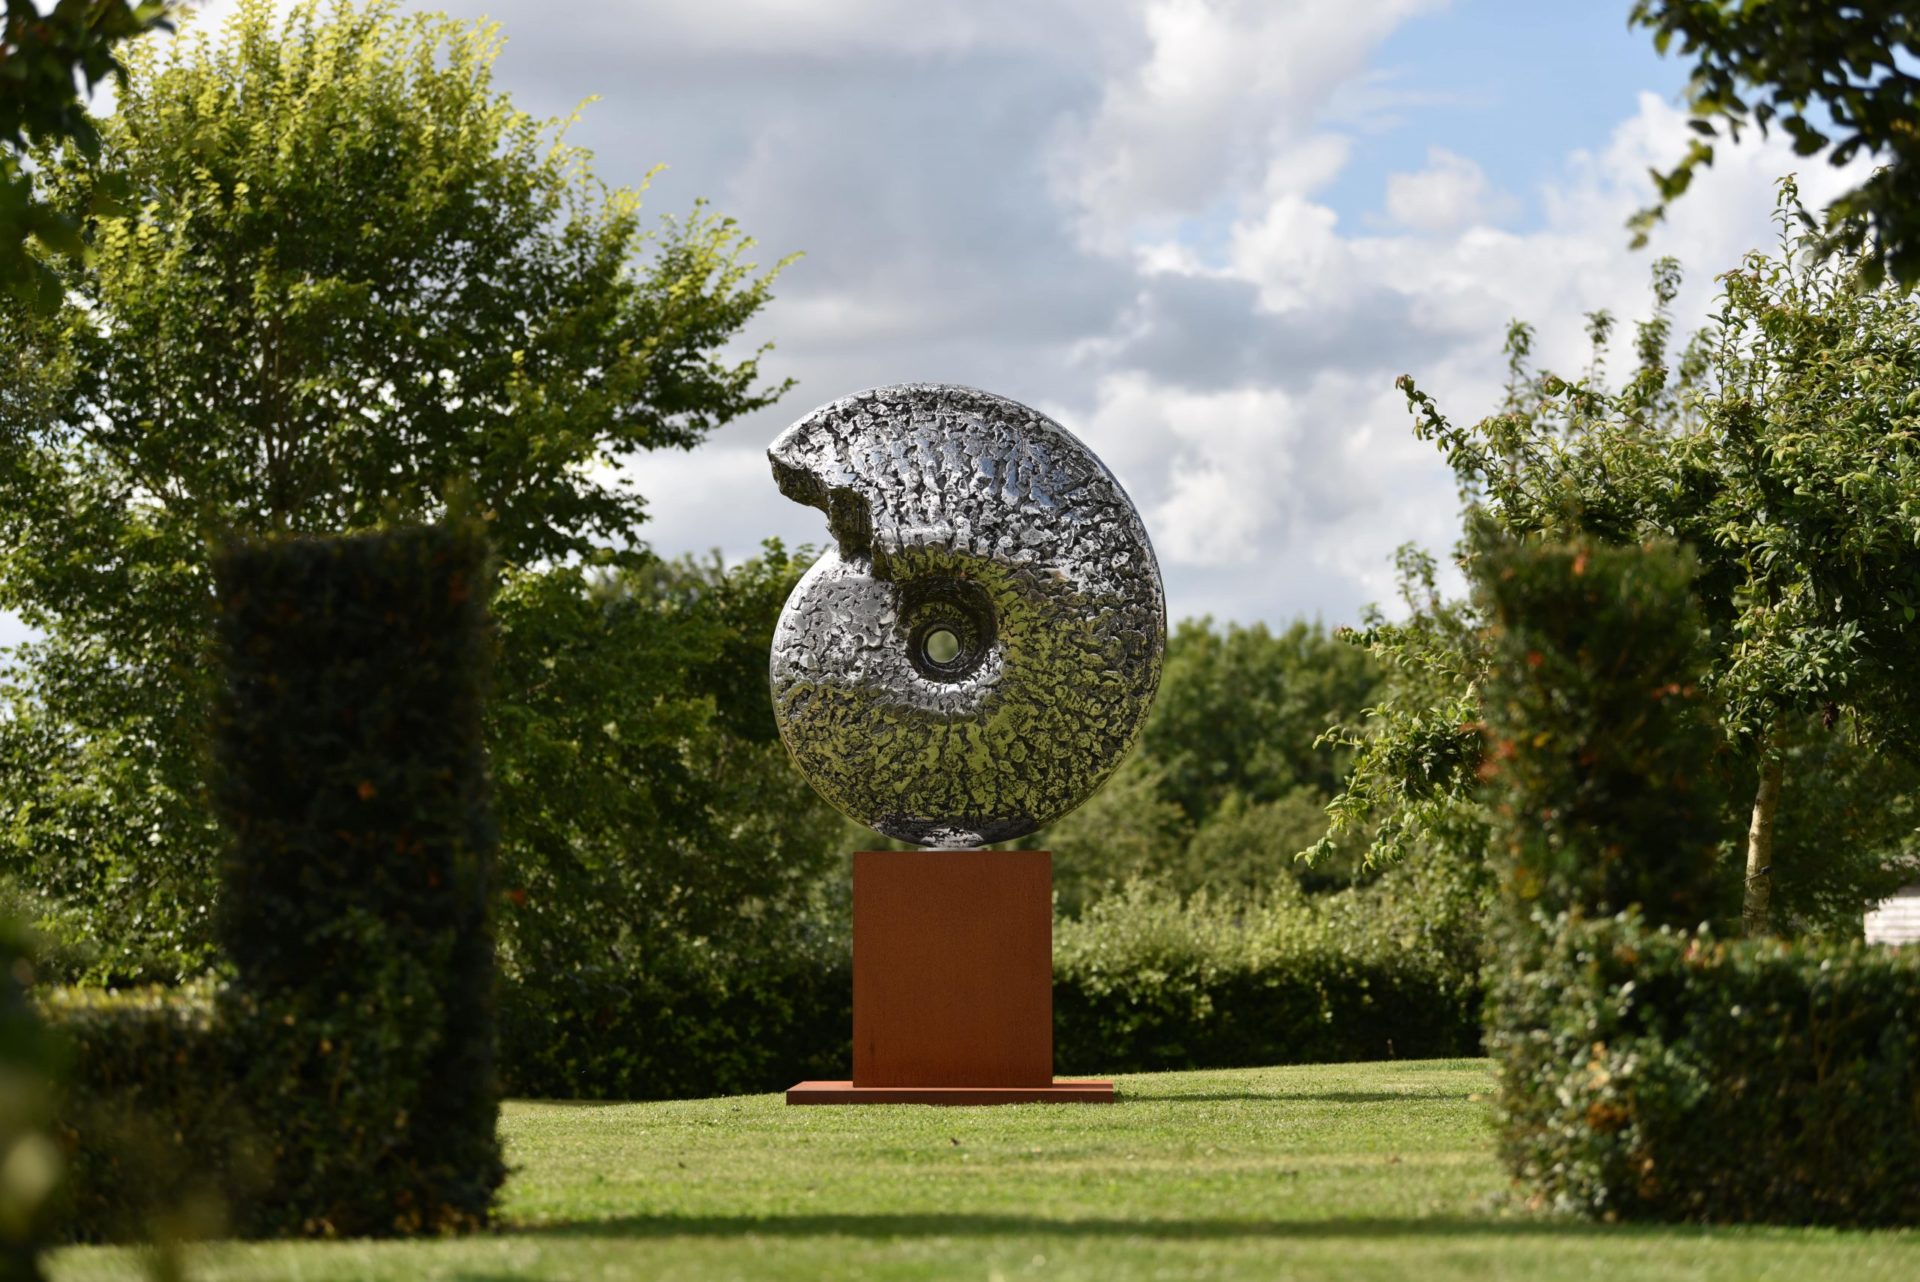 stainless steel sculpture of ammonite